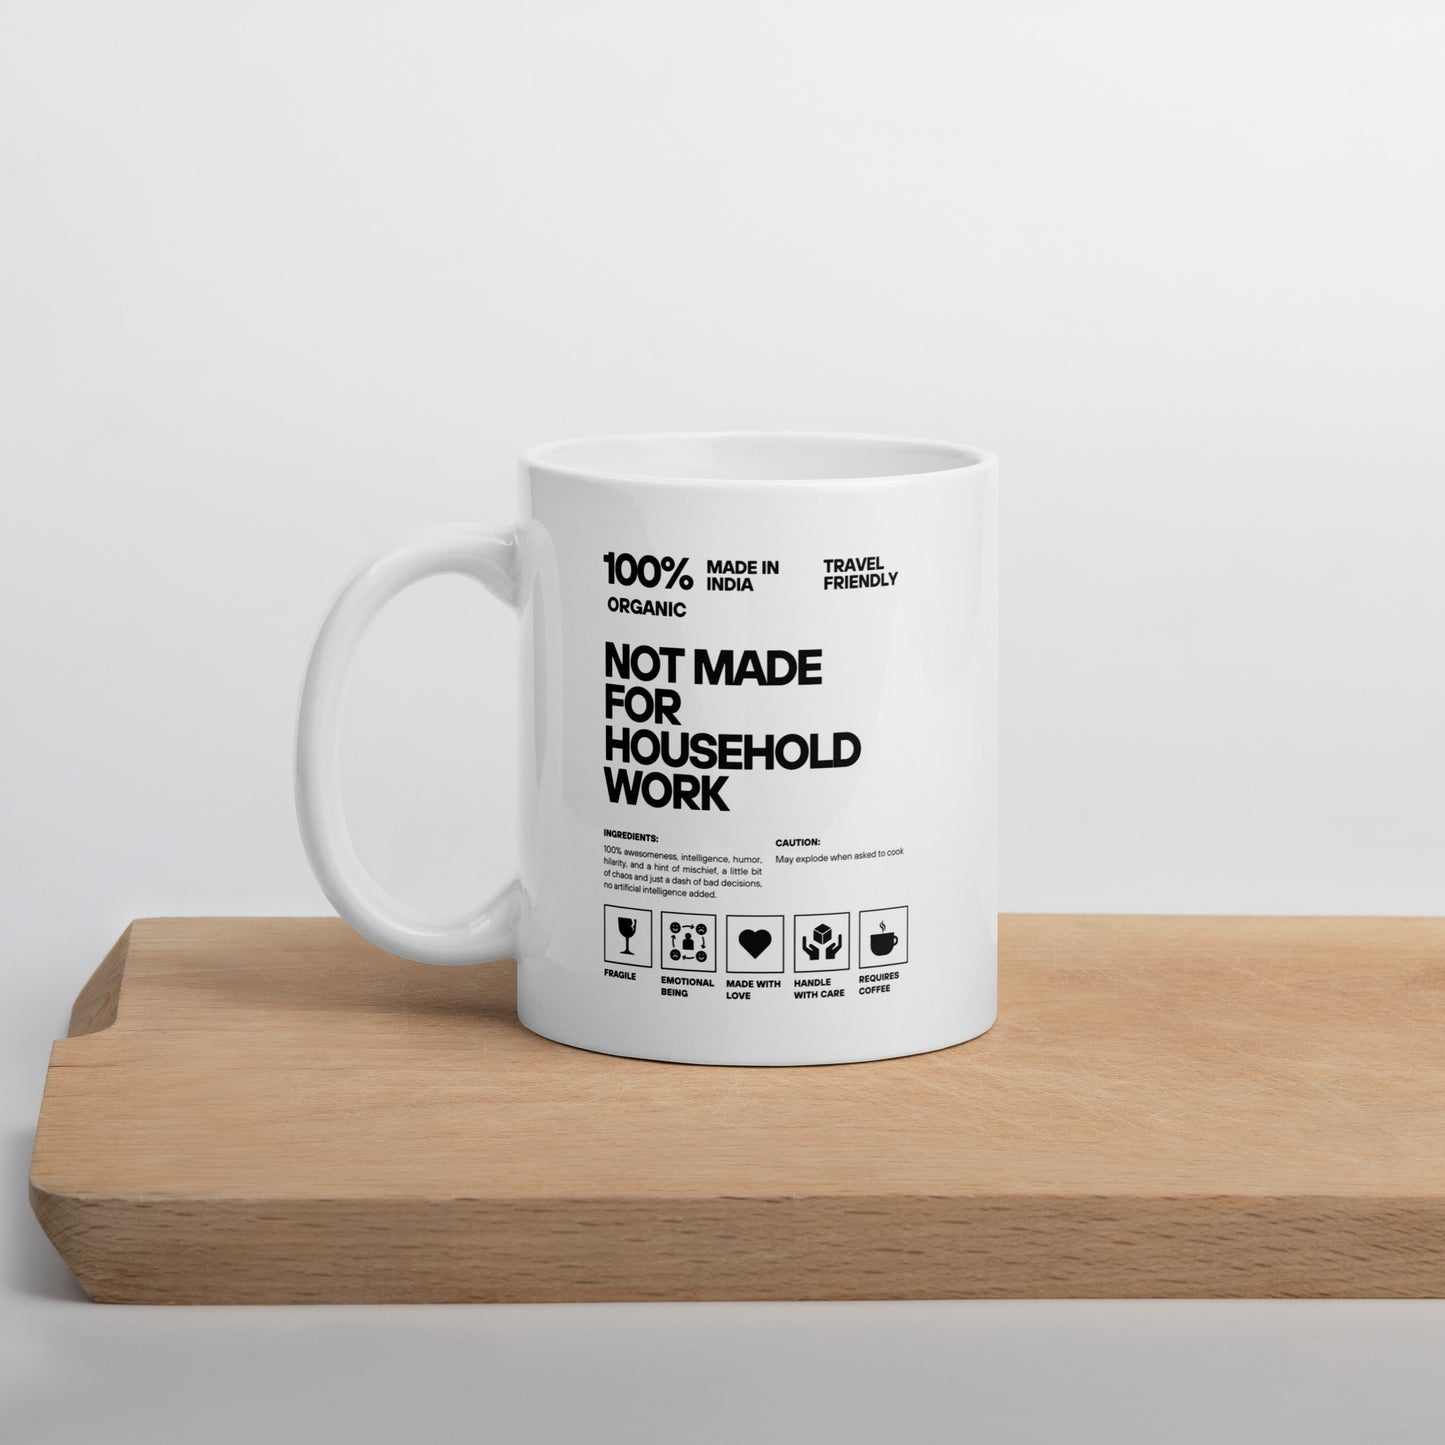 Made in India White glossy mug